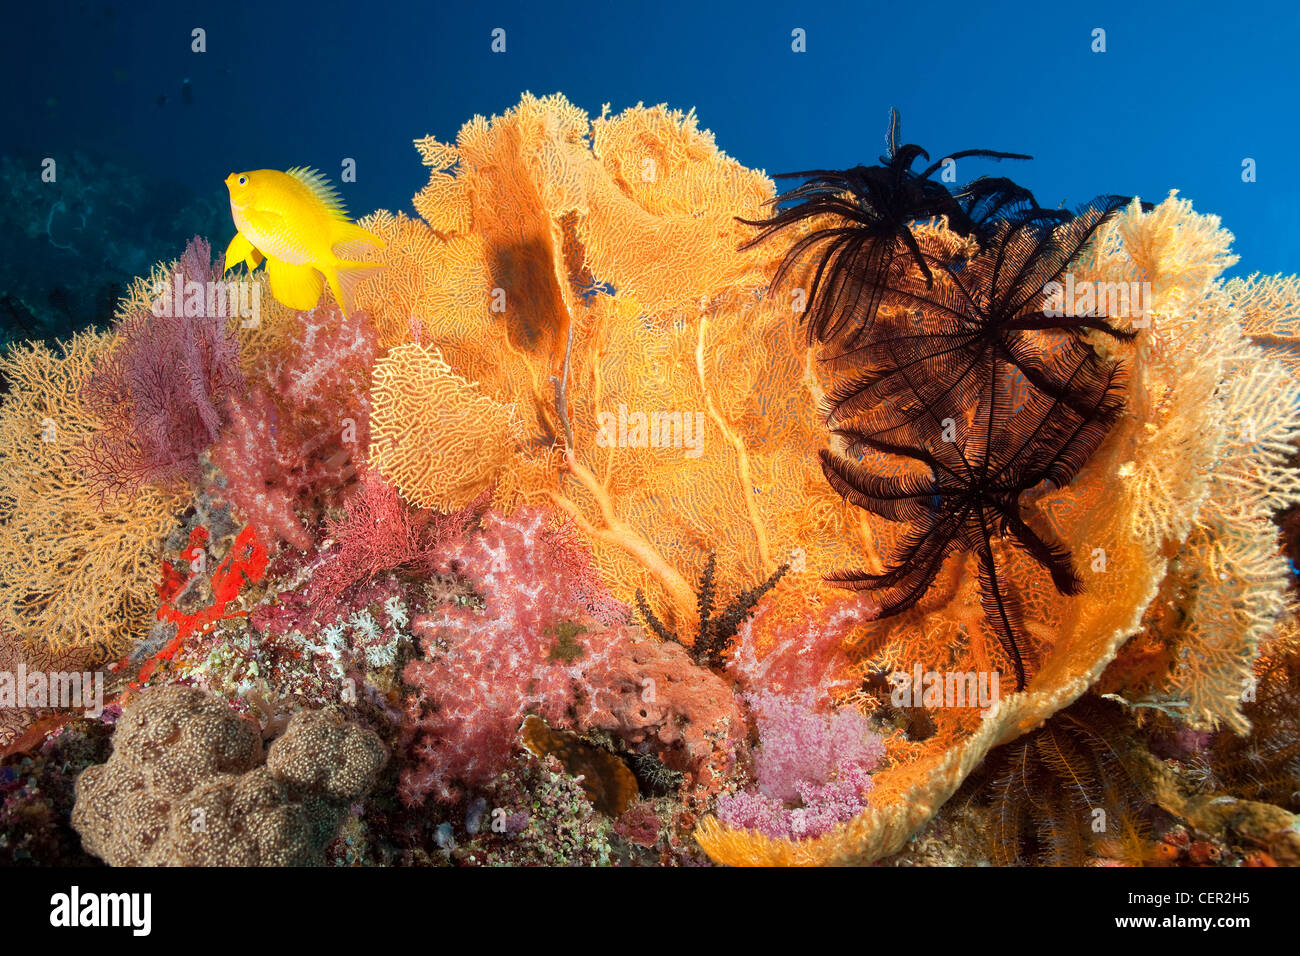 Sea Fan on Coral Reef, Subergorgia mollis, Tubbataha Reef, Sulu Sea, Philippines Stock Photo